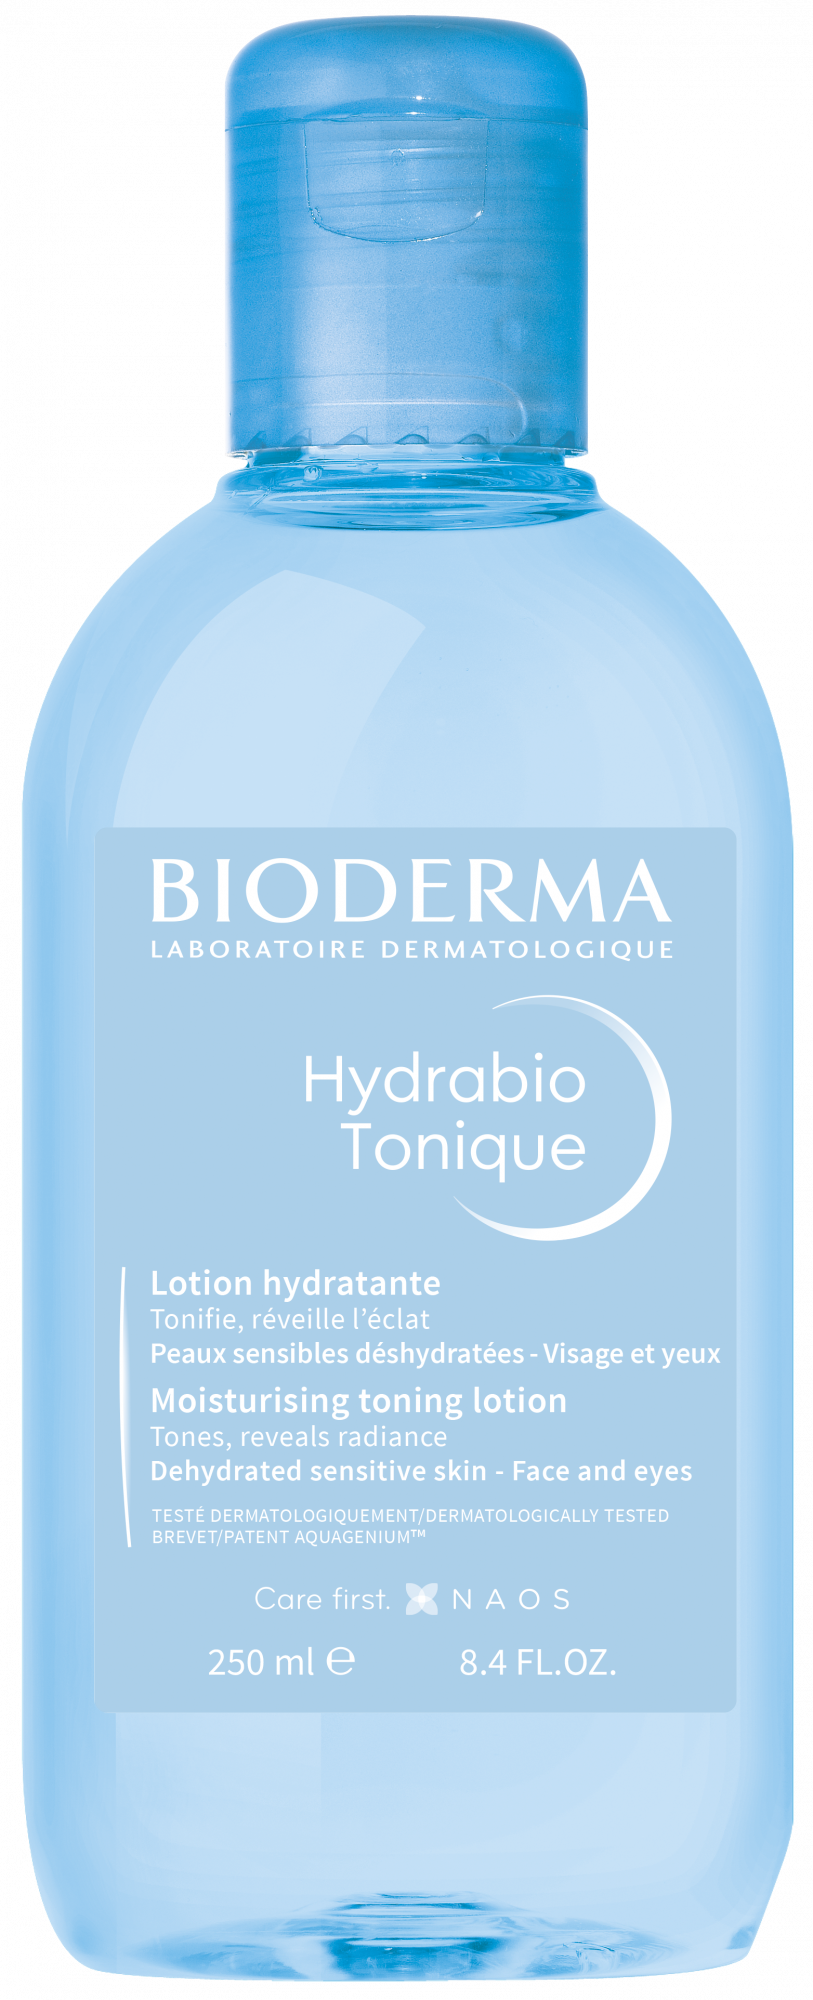 Bioderma - Hydrabio - Tonic Lotion - Hydrating Facial Lotion